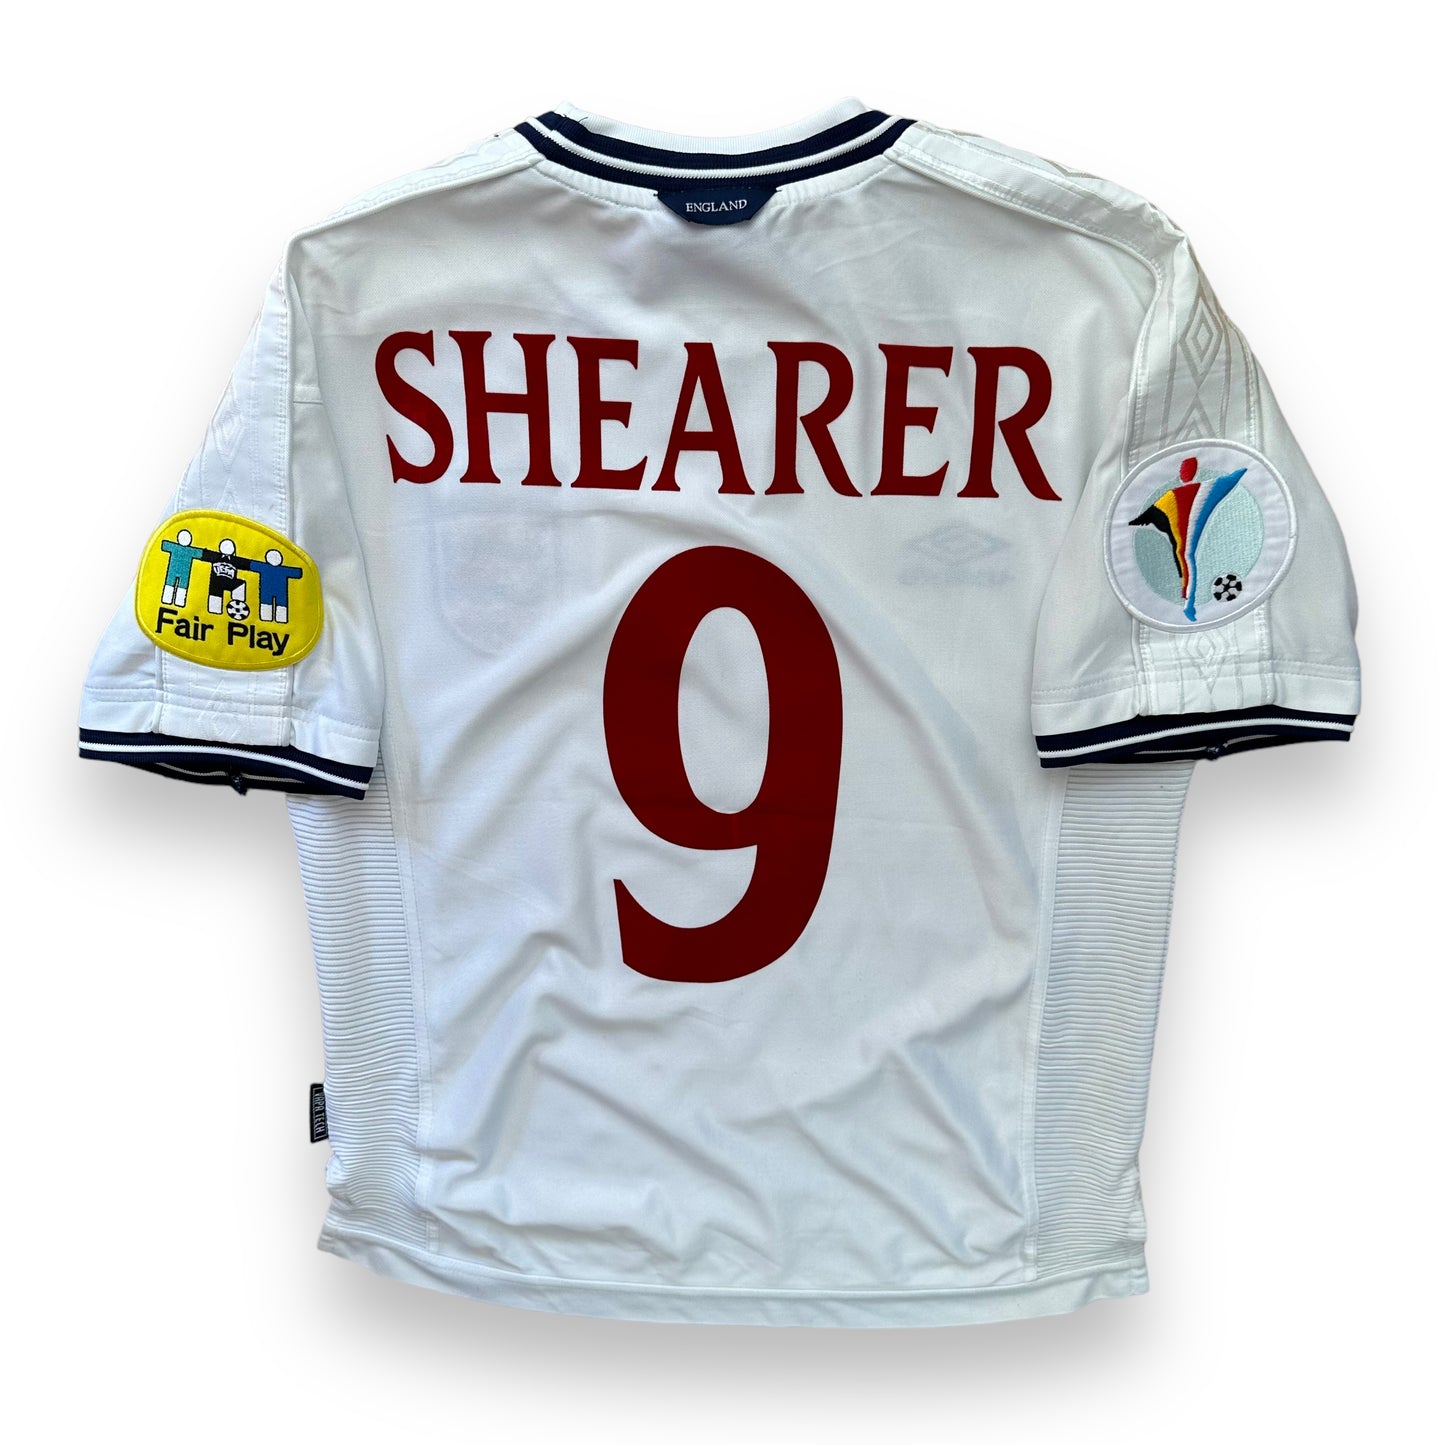 England 2000 Home Shirt (Youth) Shearer #9